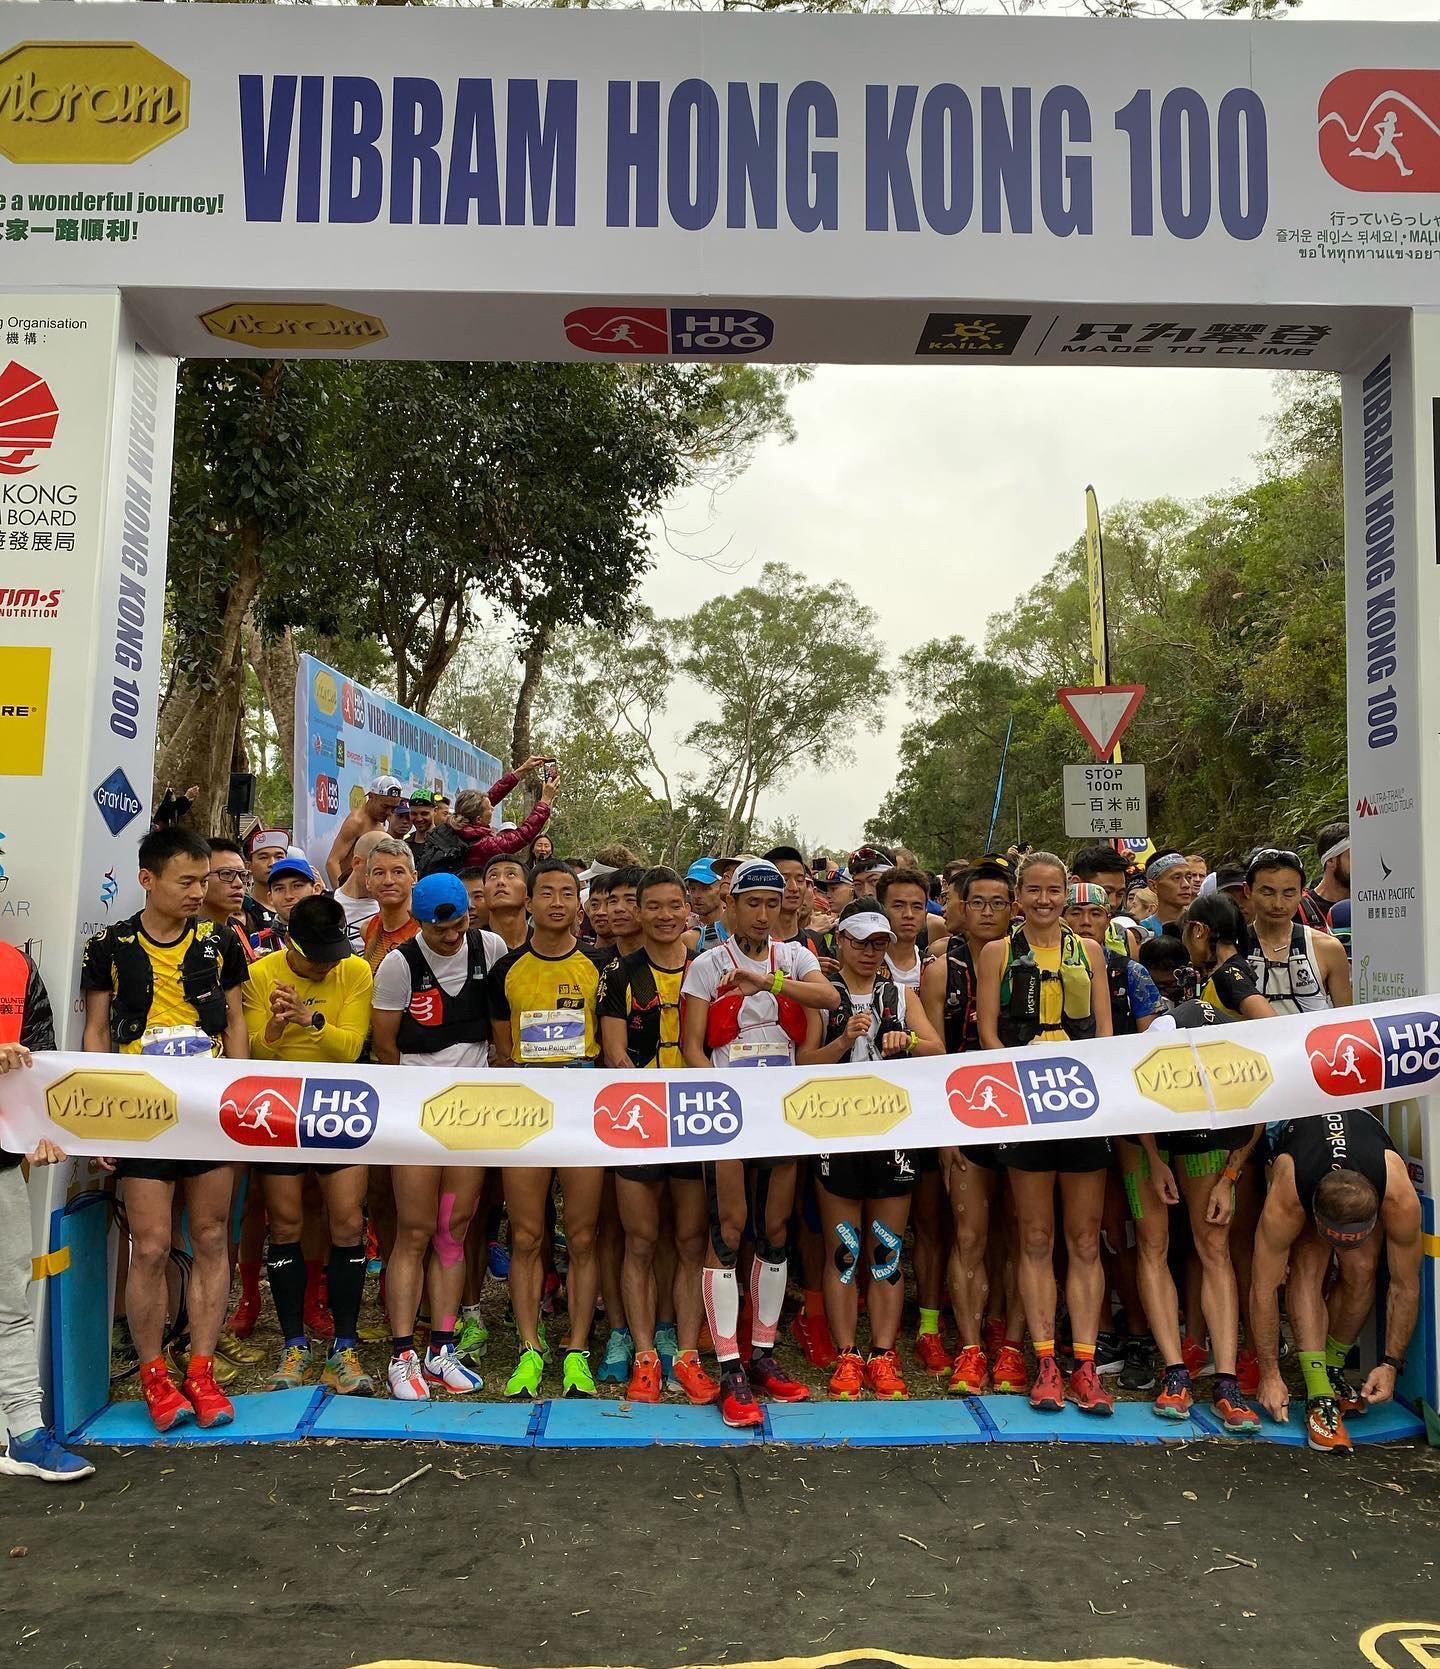 The Hong Kong 100 is one of nine races on the new World Trail Majors. Photo: Vibram Hong Kong 100